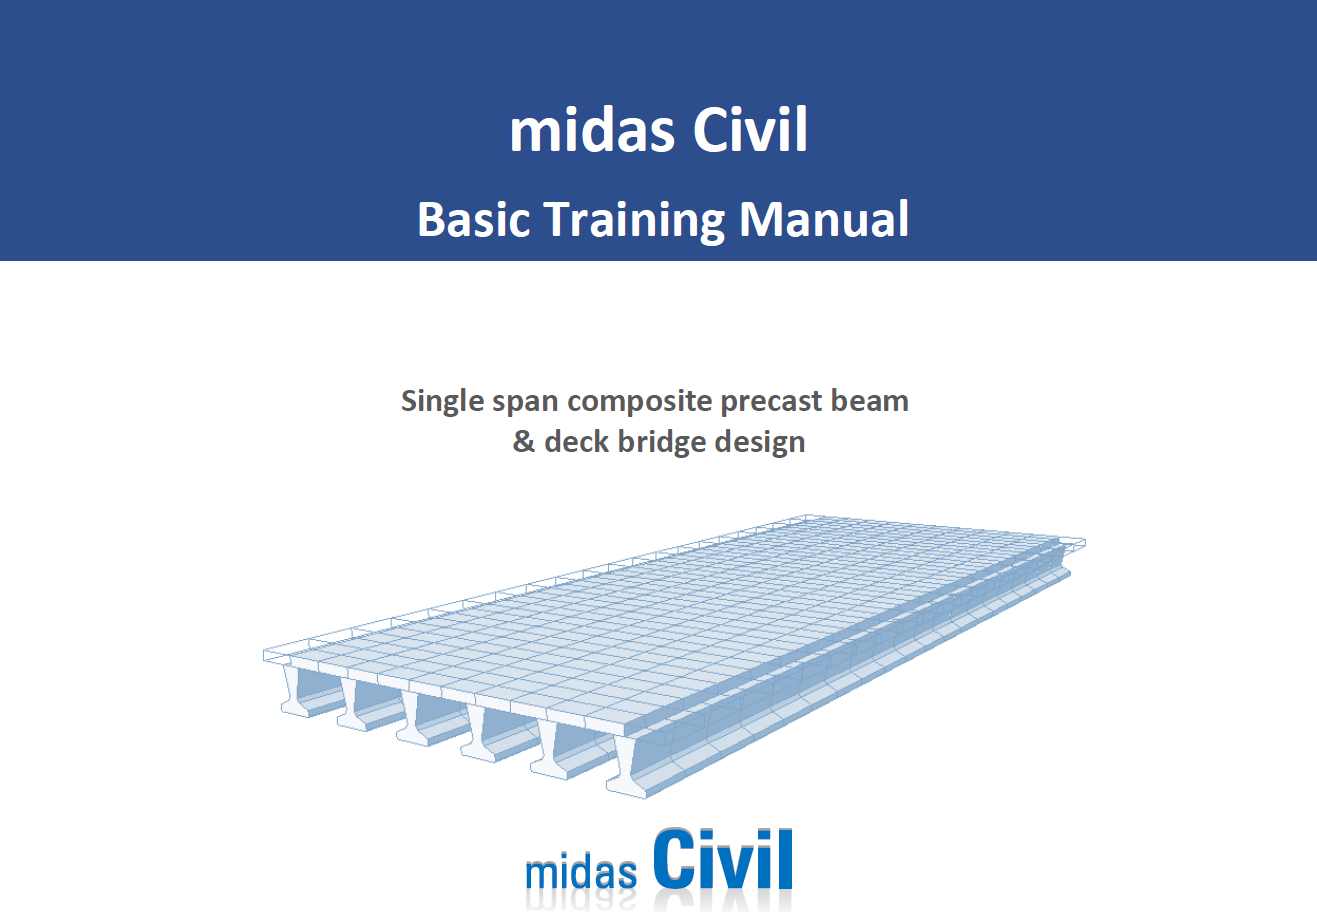 Single span composite precast beam and deck bridge design cover